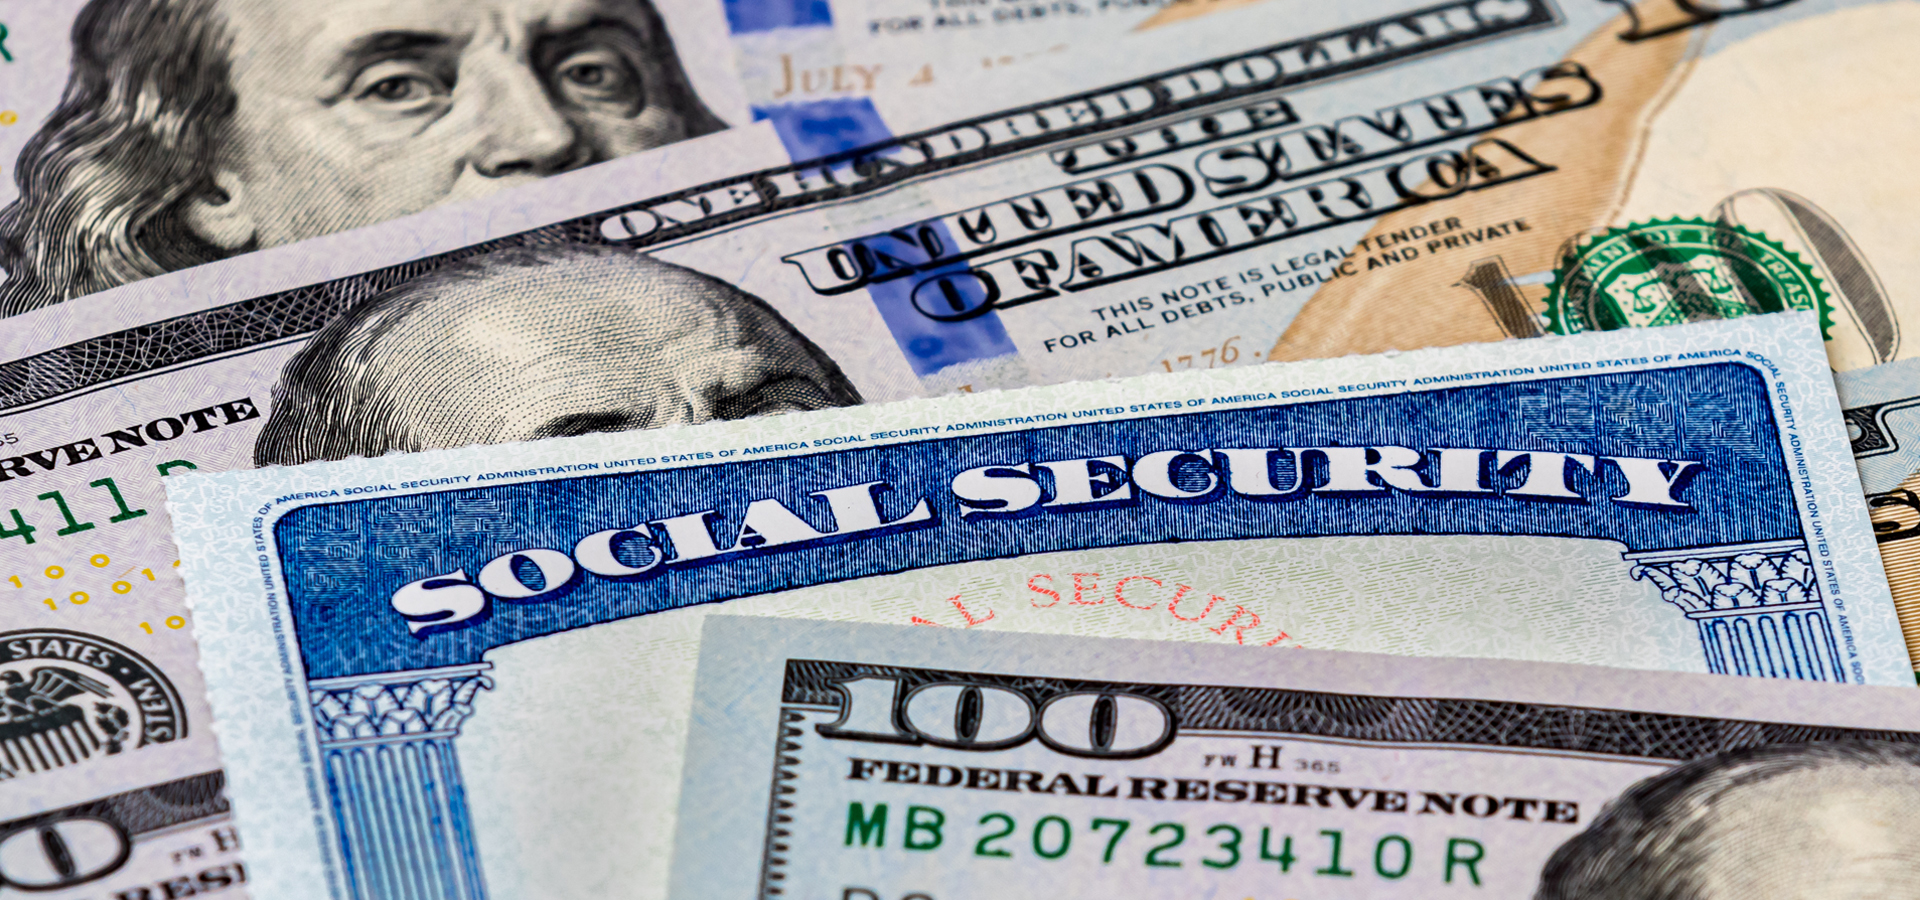 A Social Security card in between Dollar bills